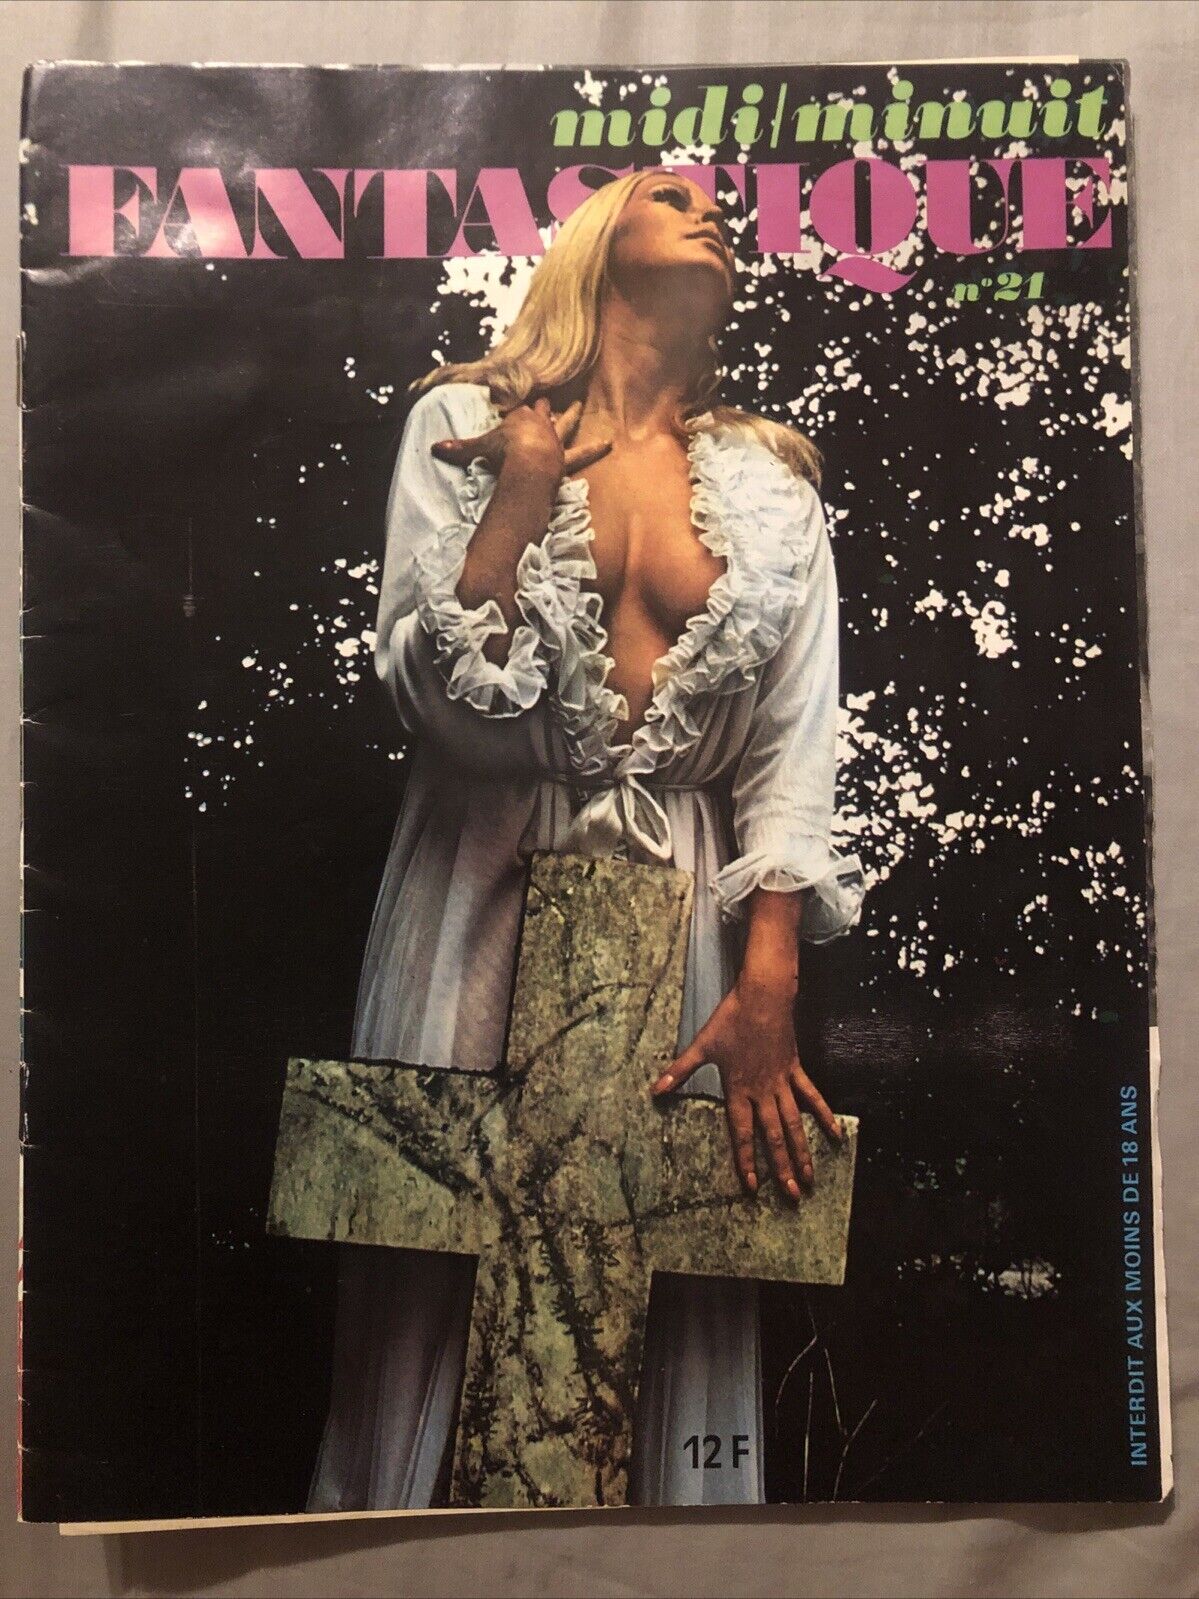 French 1960s/70s Monster Magazine Midi Minuit Fantastique #21 Missing Pages